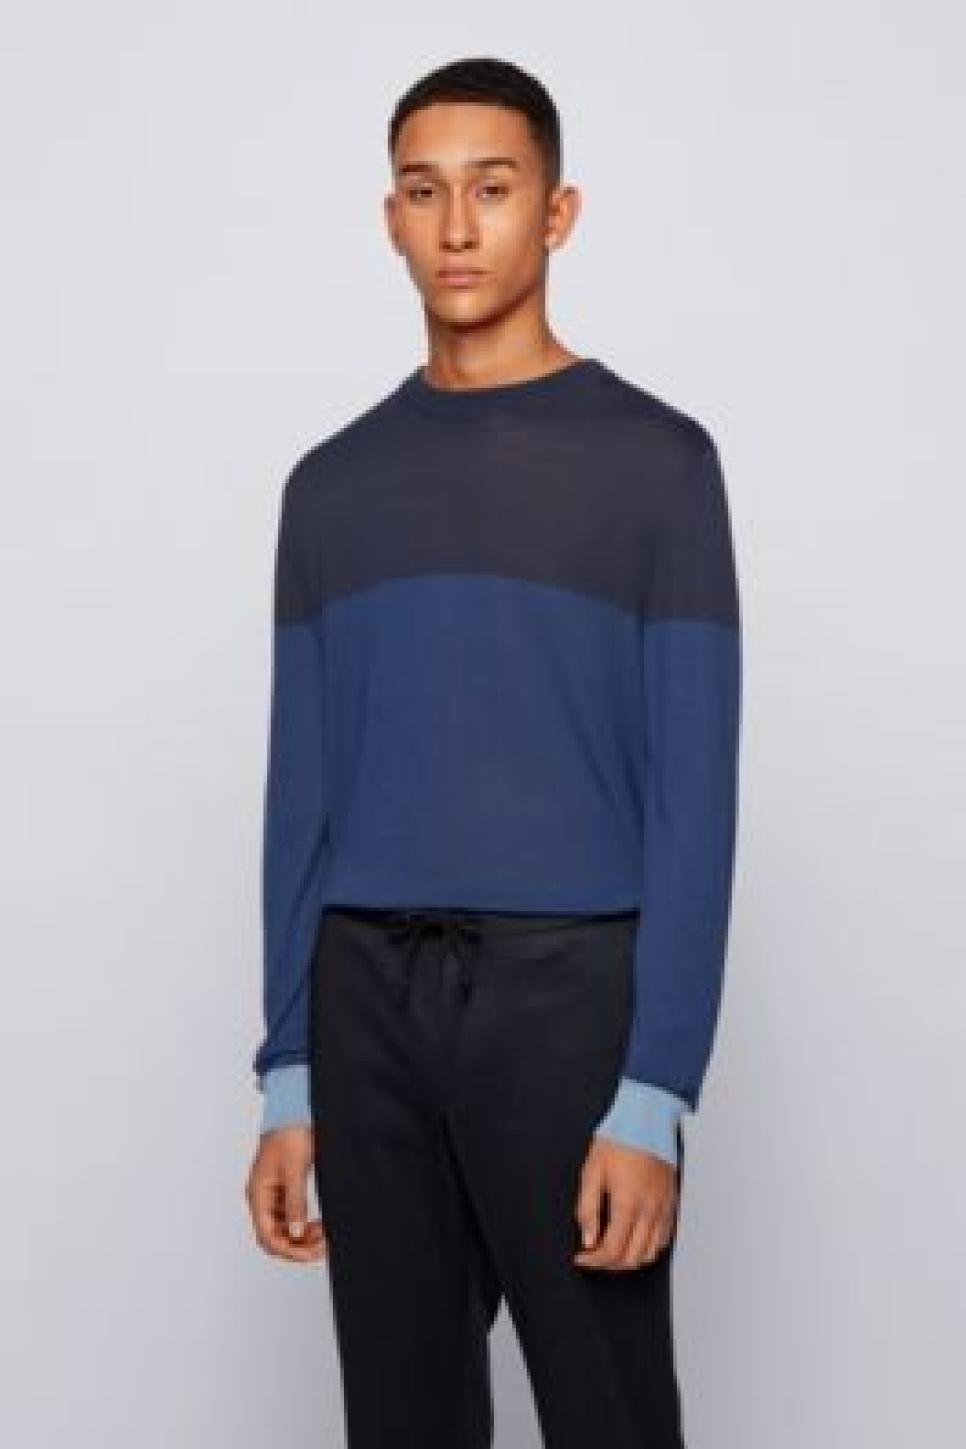 rx-hugobosspure-silk-color-block-sweater.jpeg